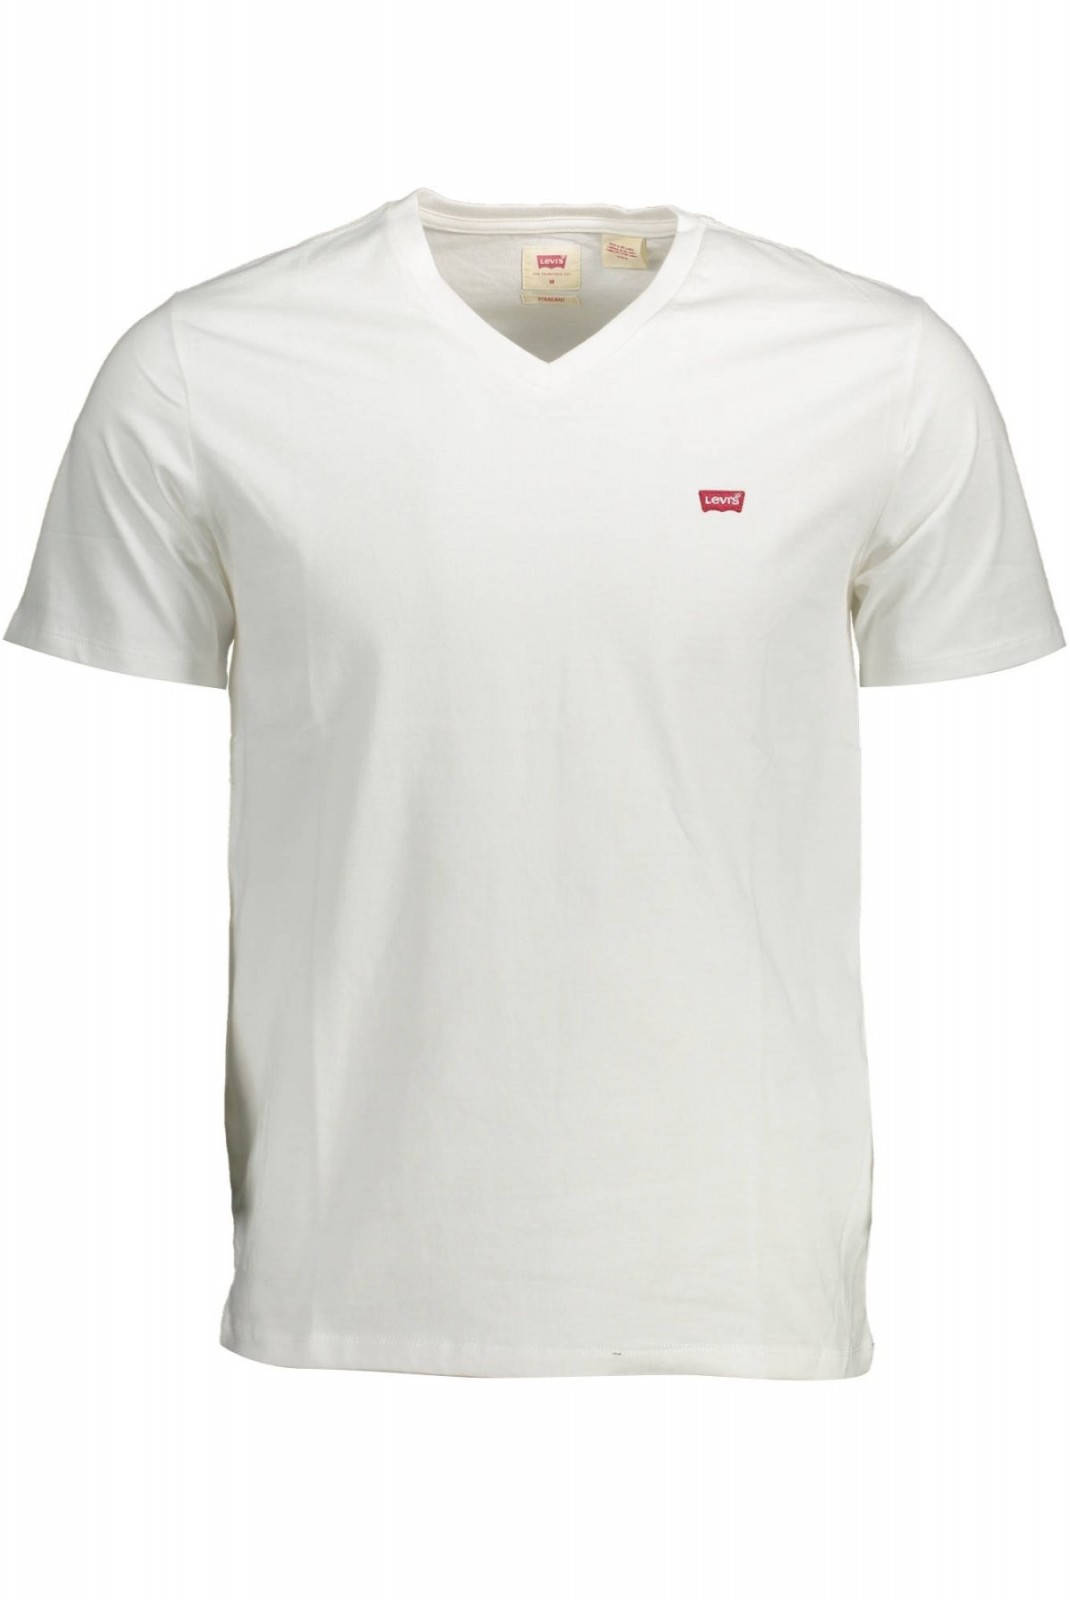 T-shirt logo Levi's 0000 WHITE 85641